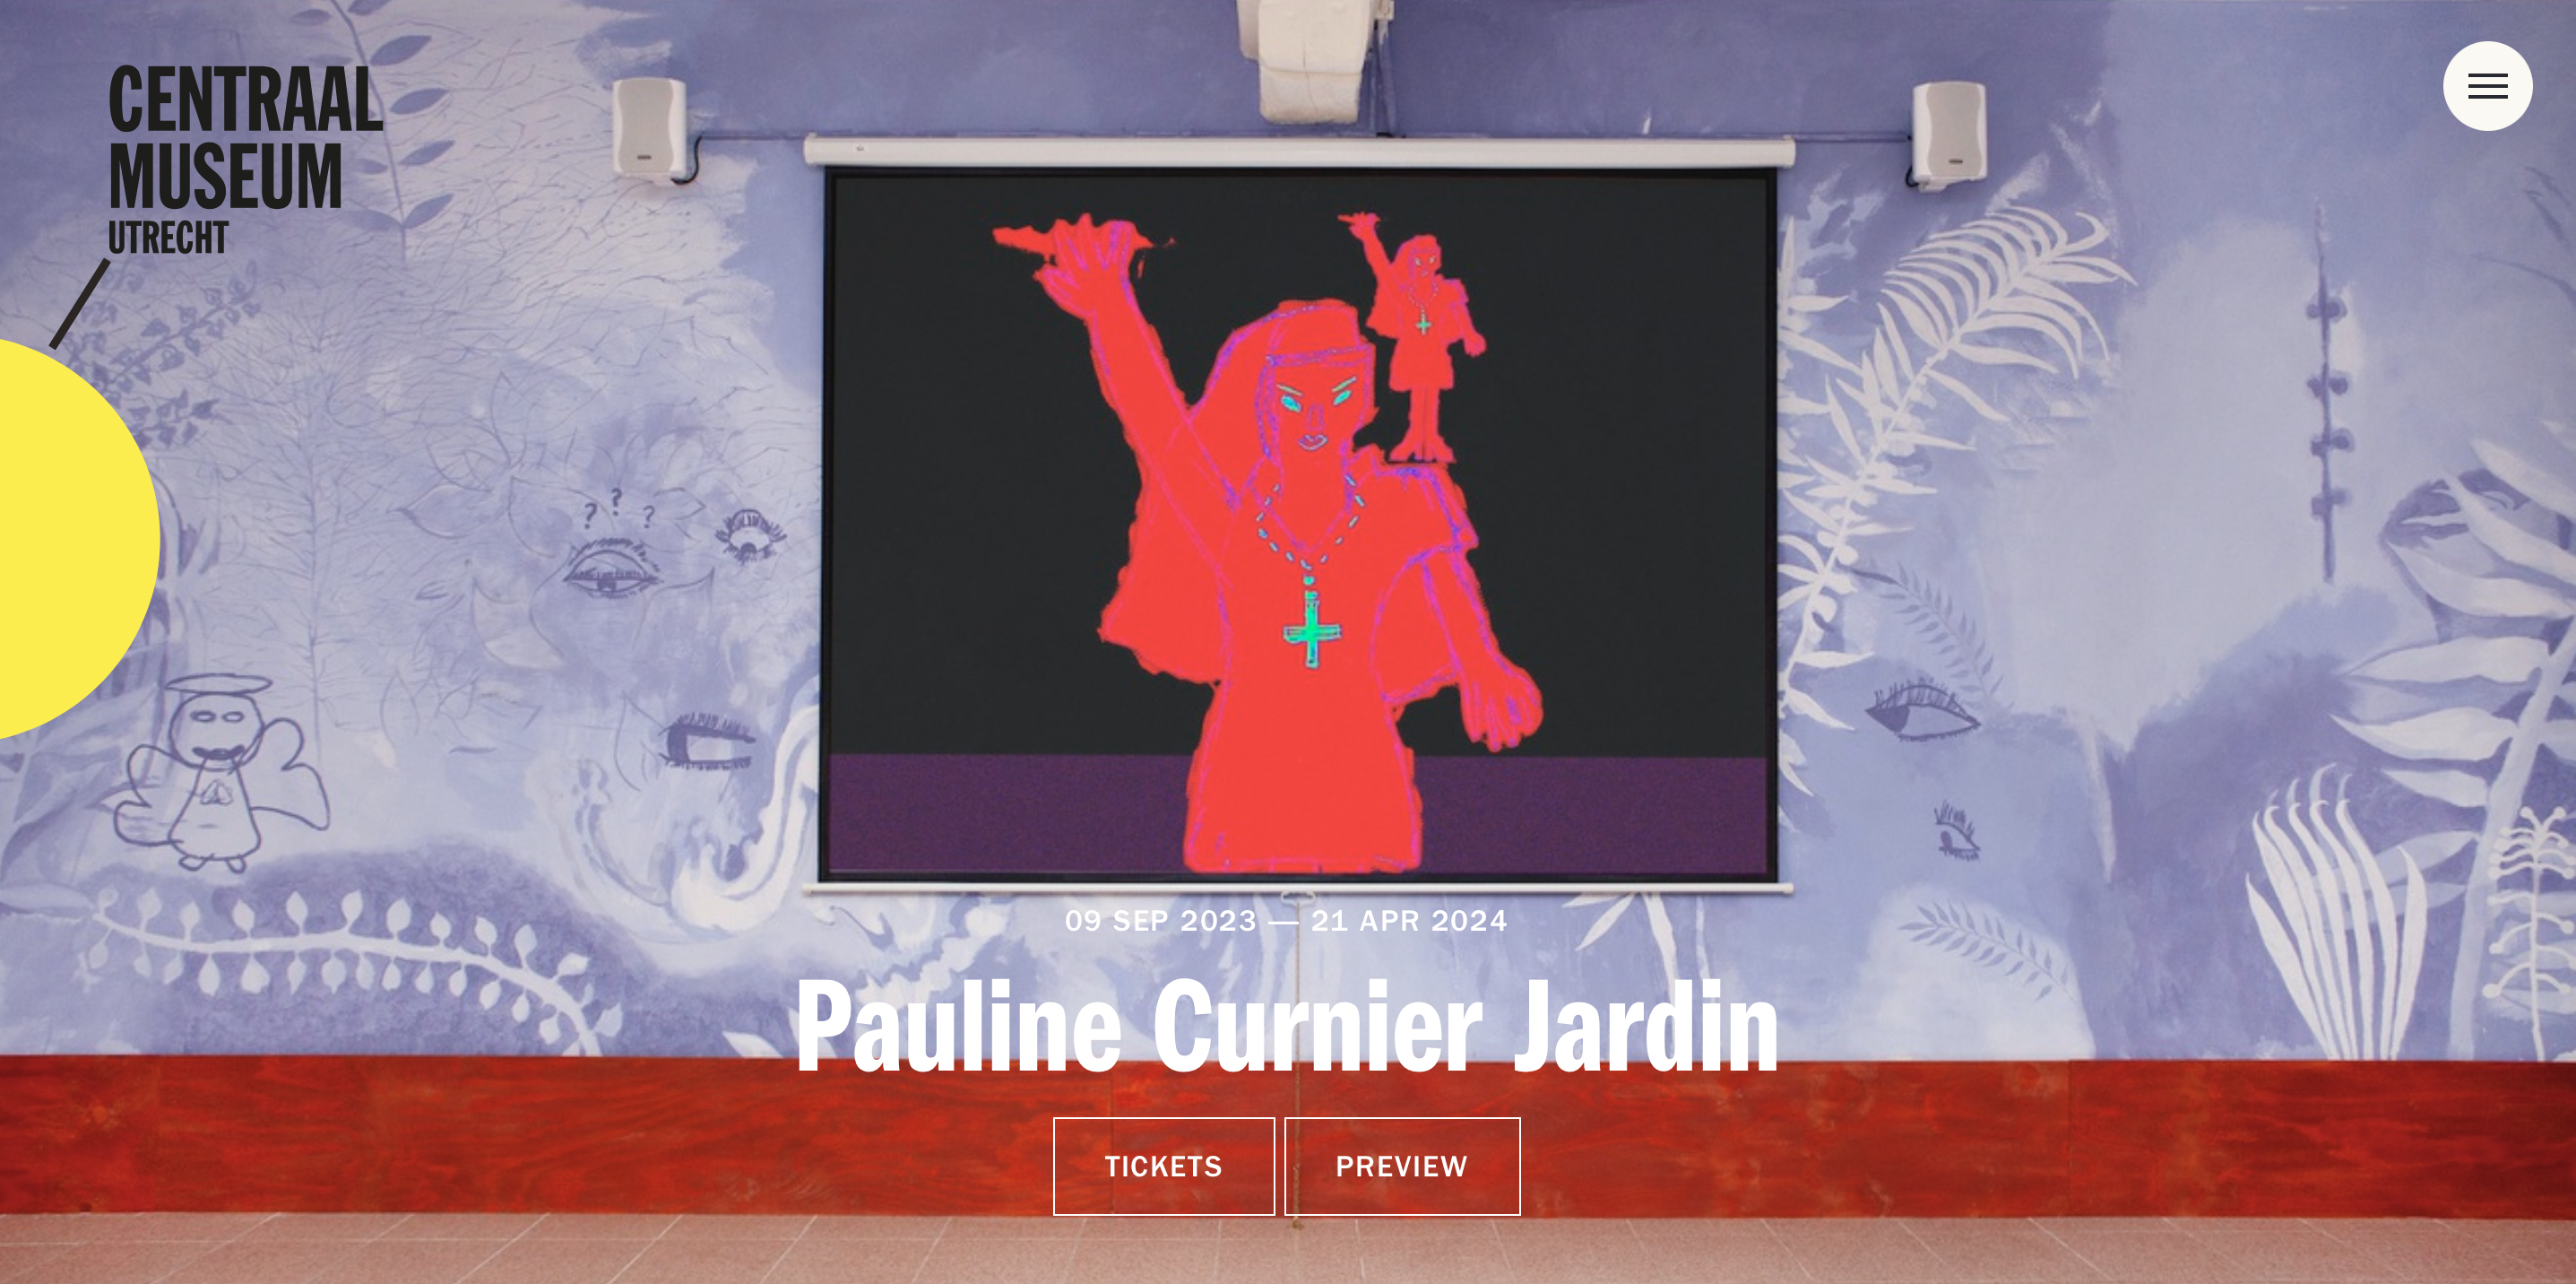 Pauline Curnier Jardin - Centraal Museum cover